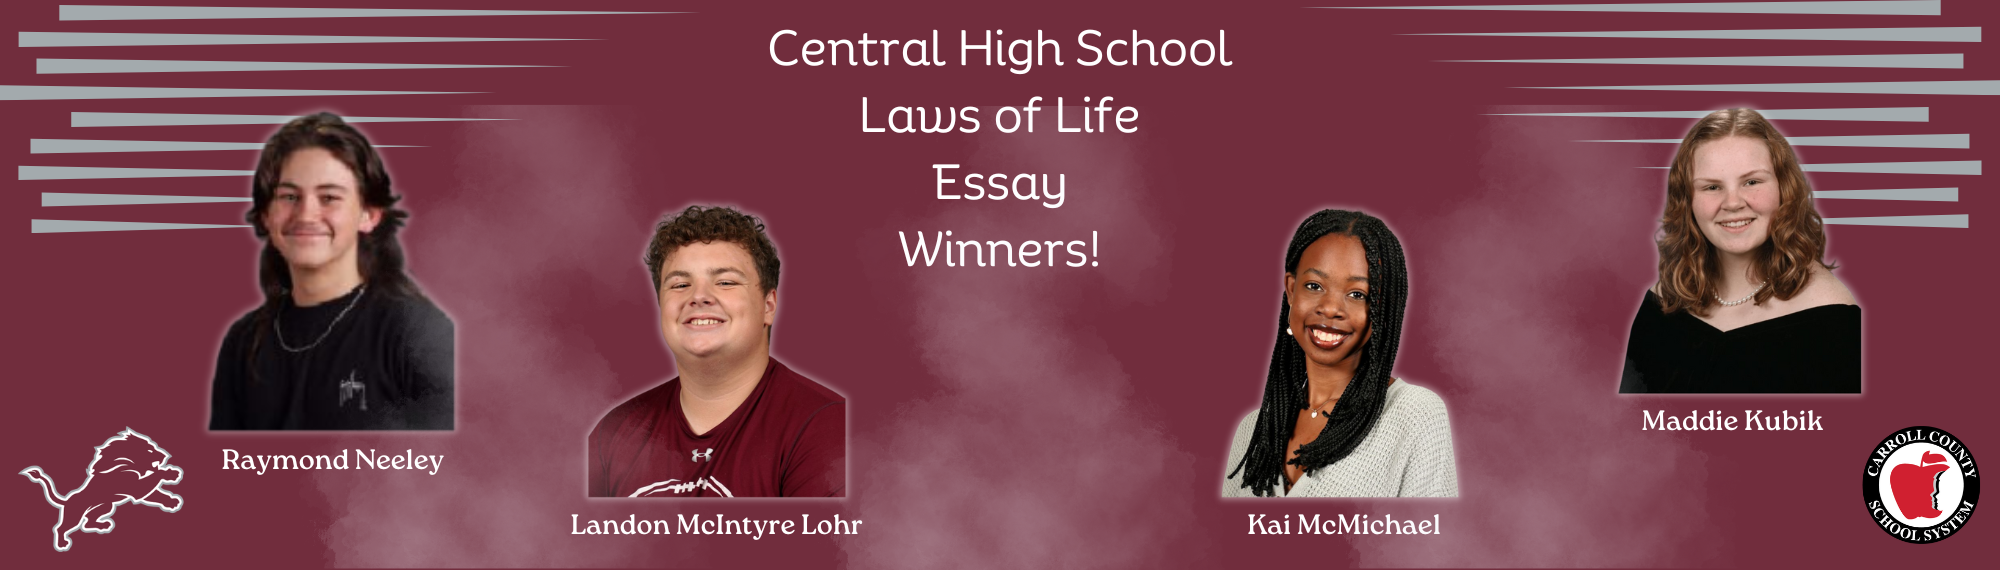 Laws of Life Essay Winners